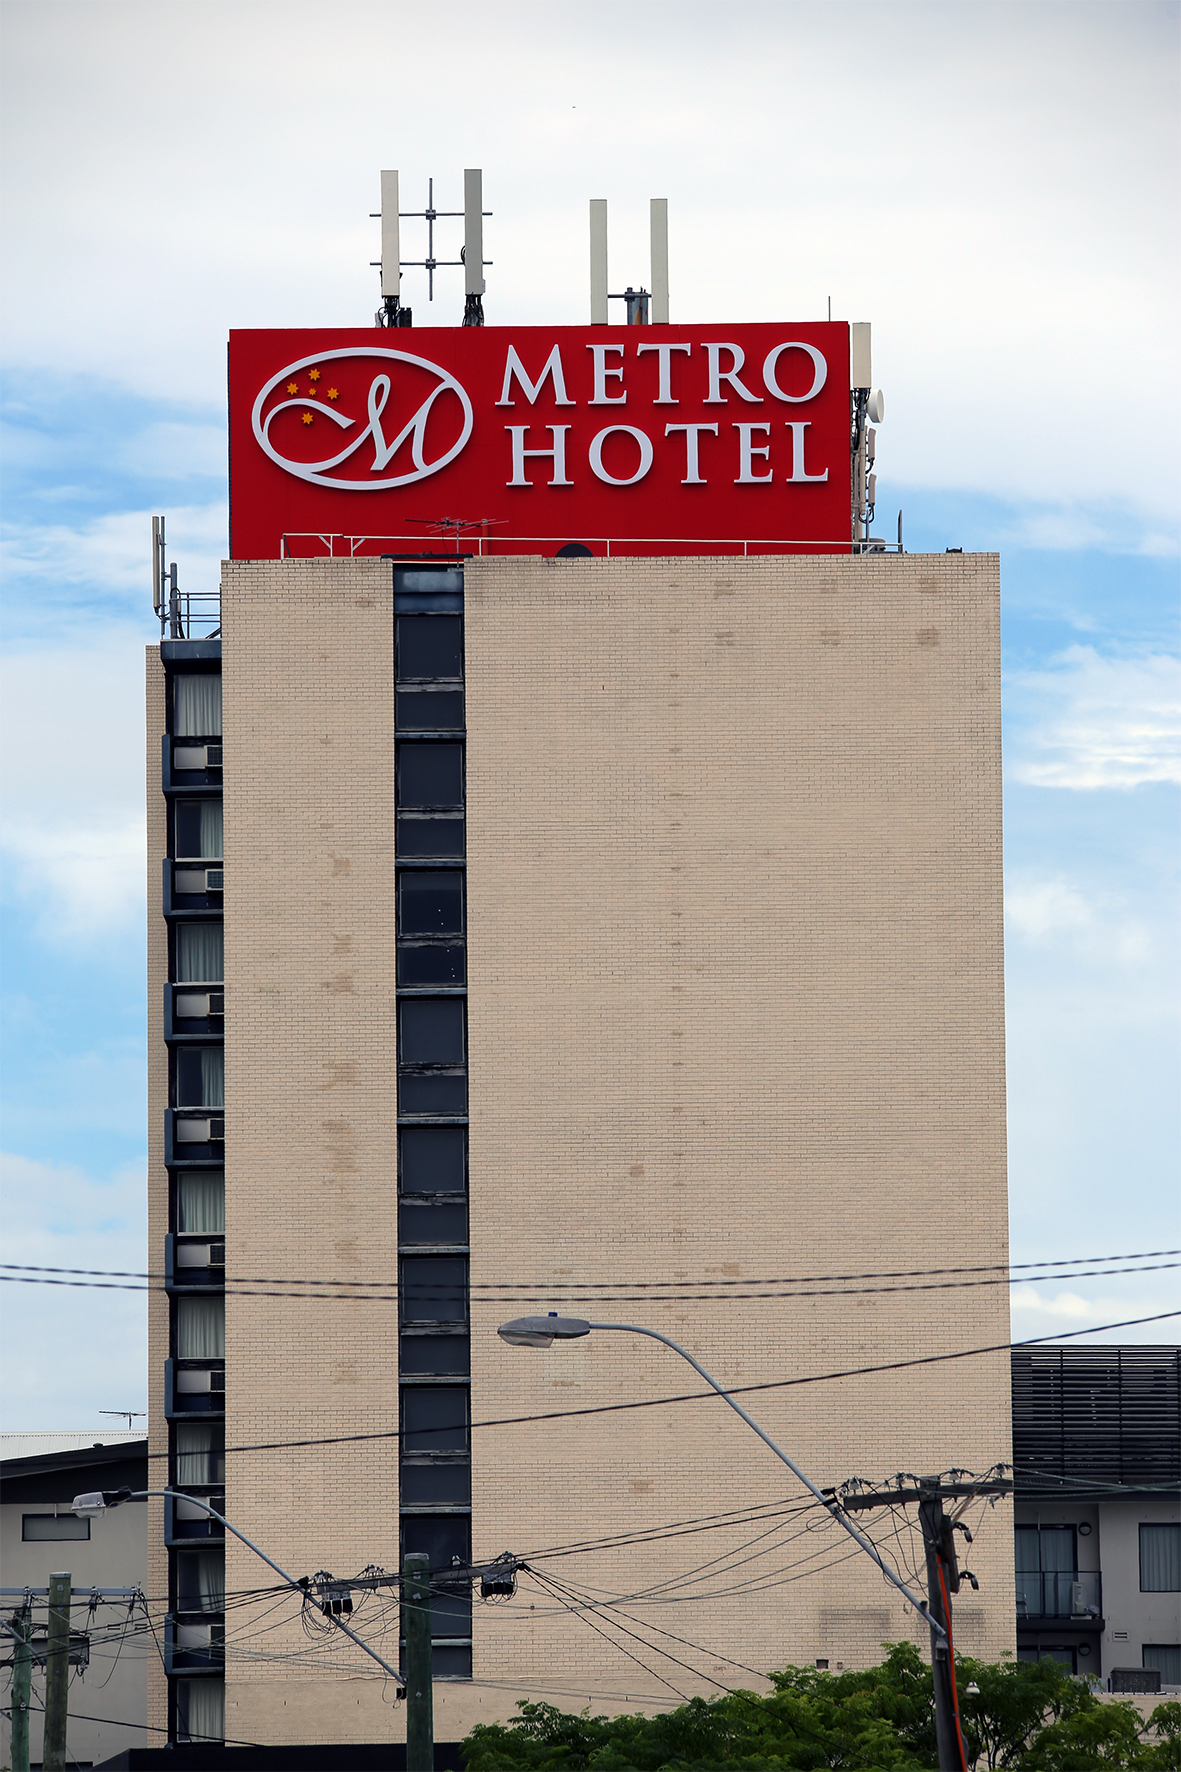 Metro Hotel Skysign 2